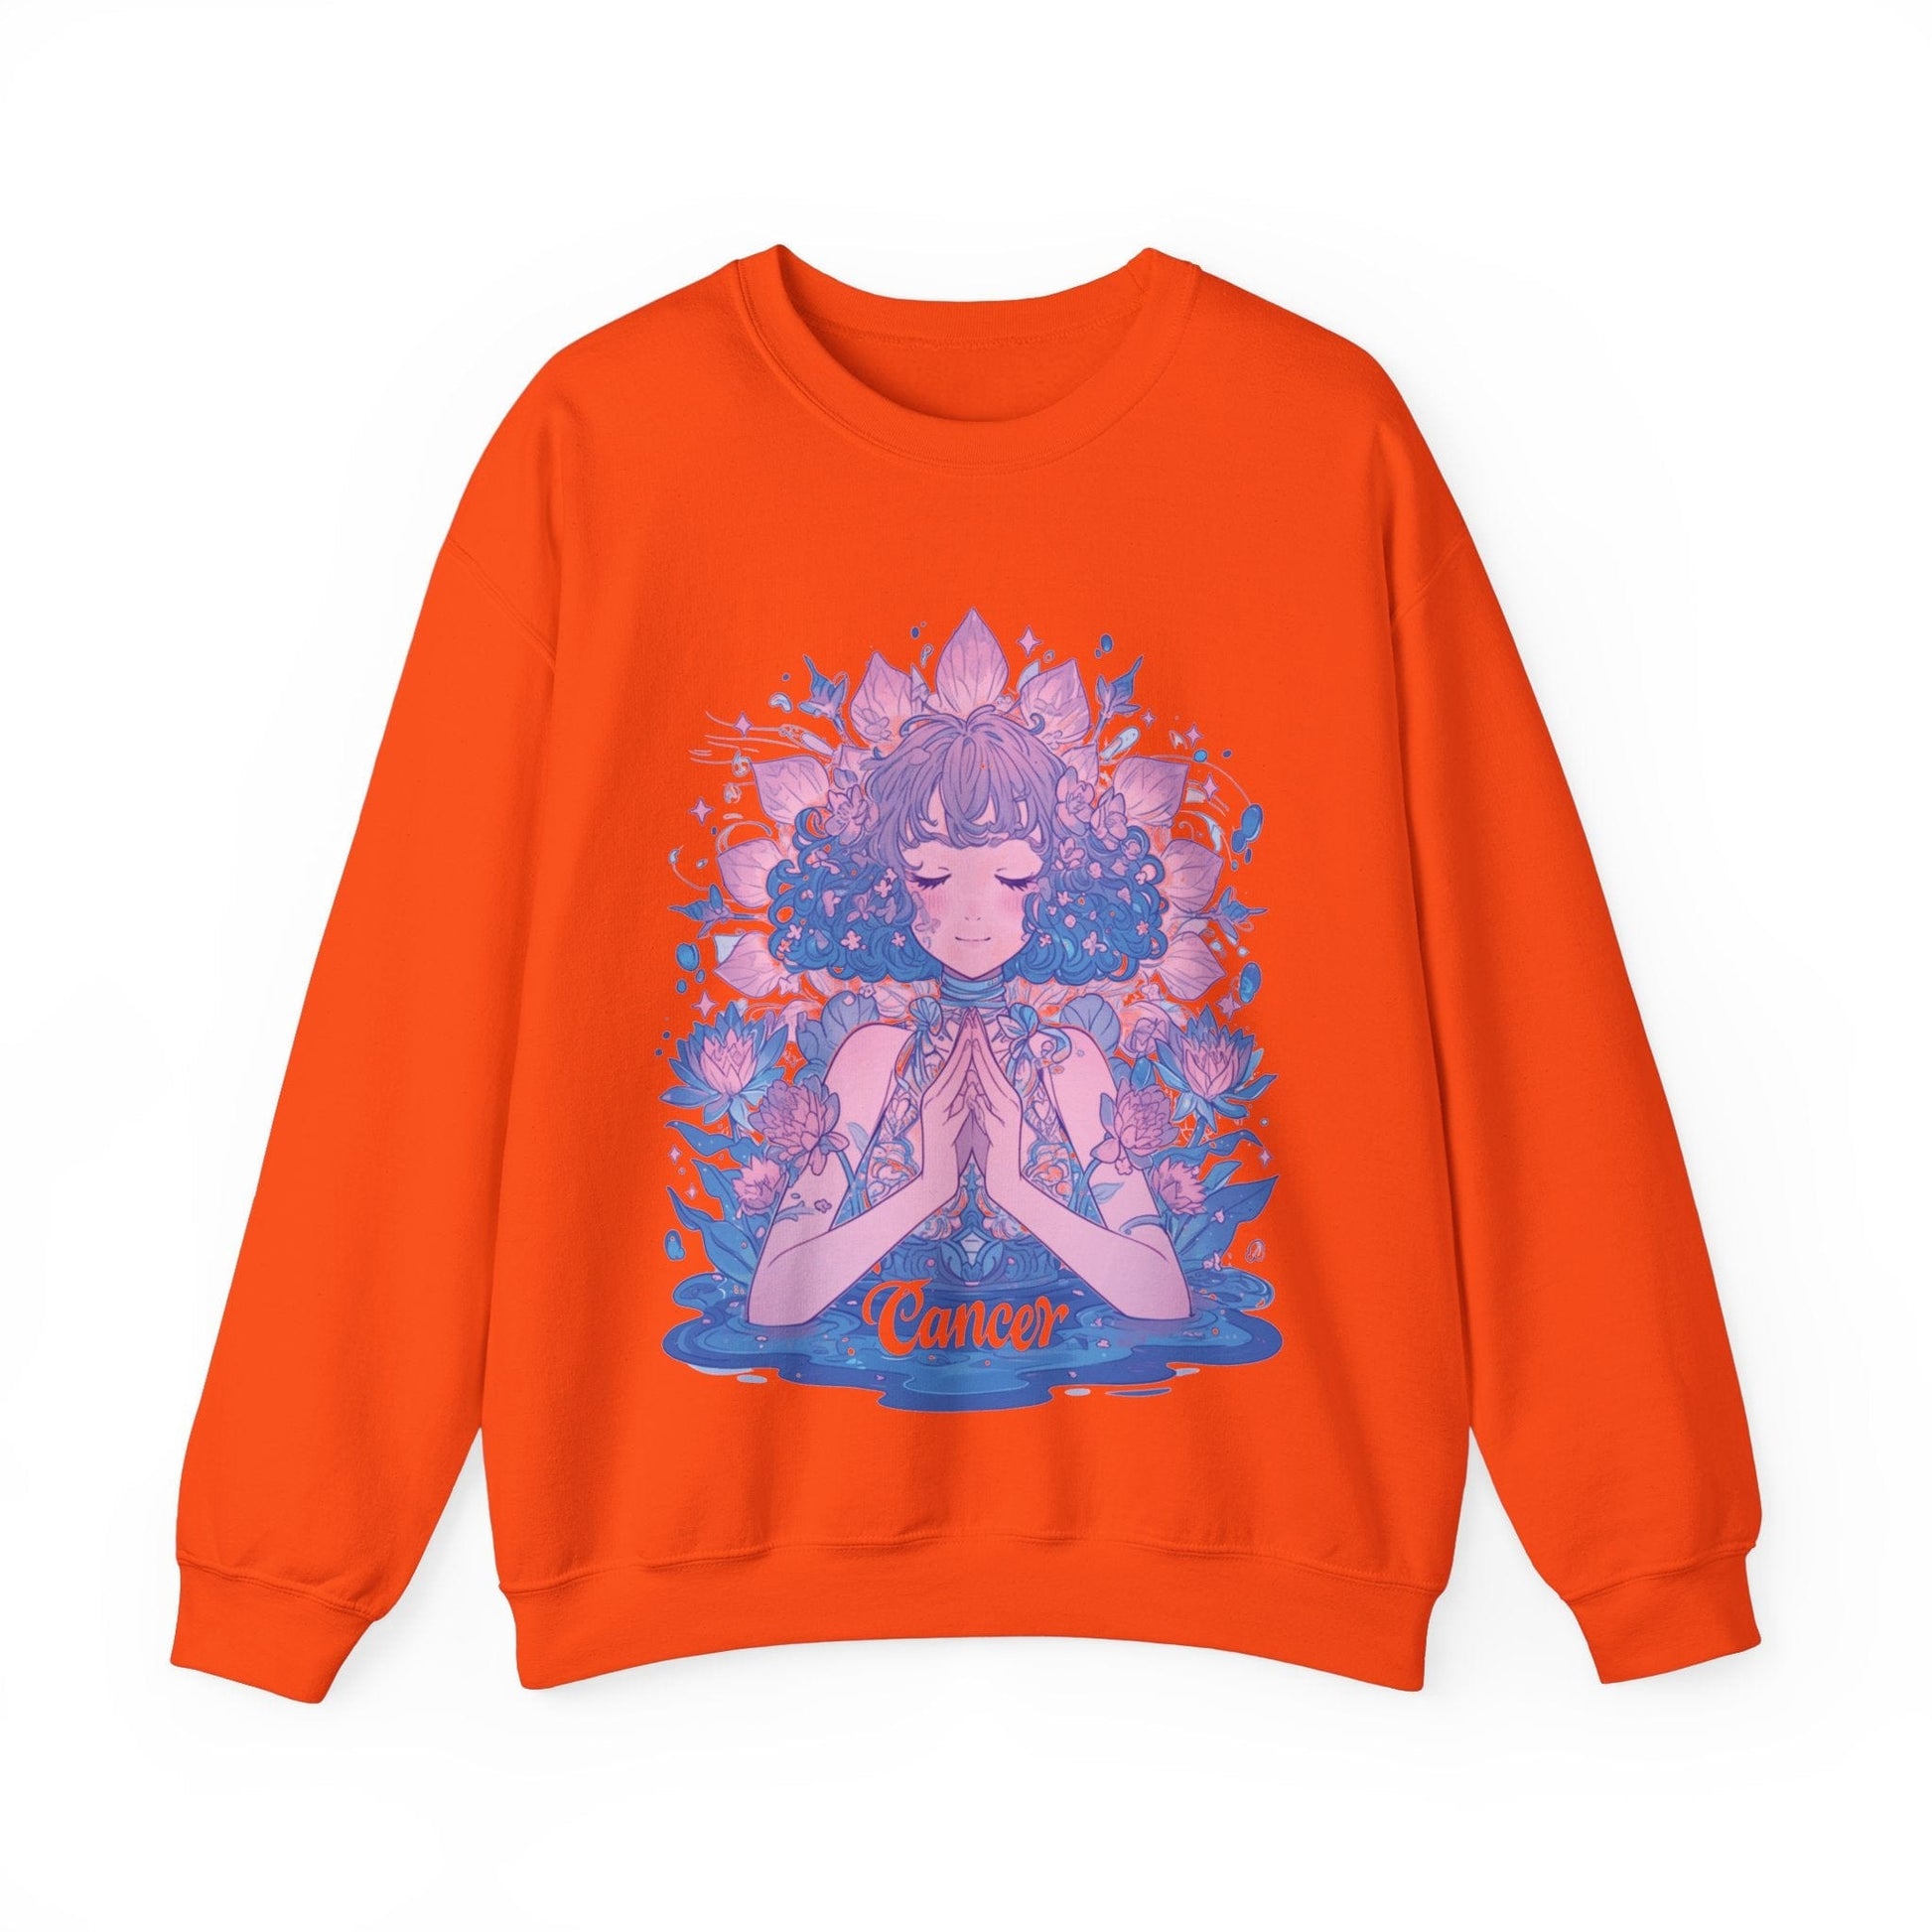 Sweatshirt S / Orange Lunar Bloom Cancer Sweater: Embrace Tranquility